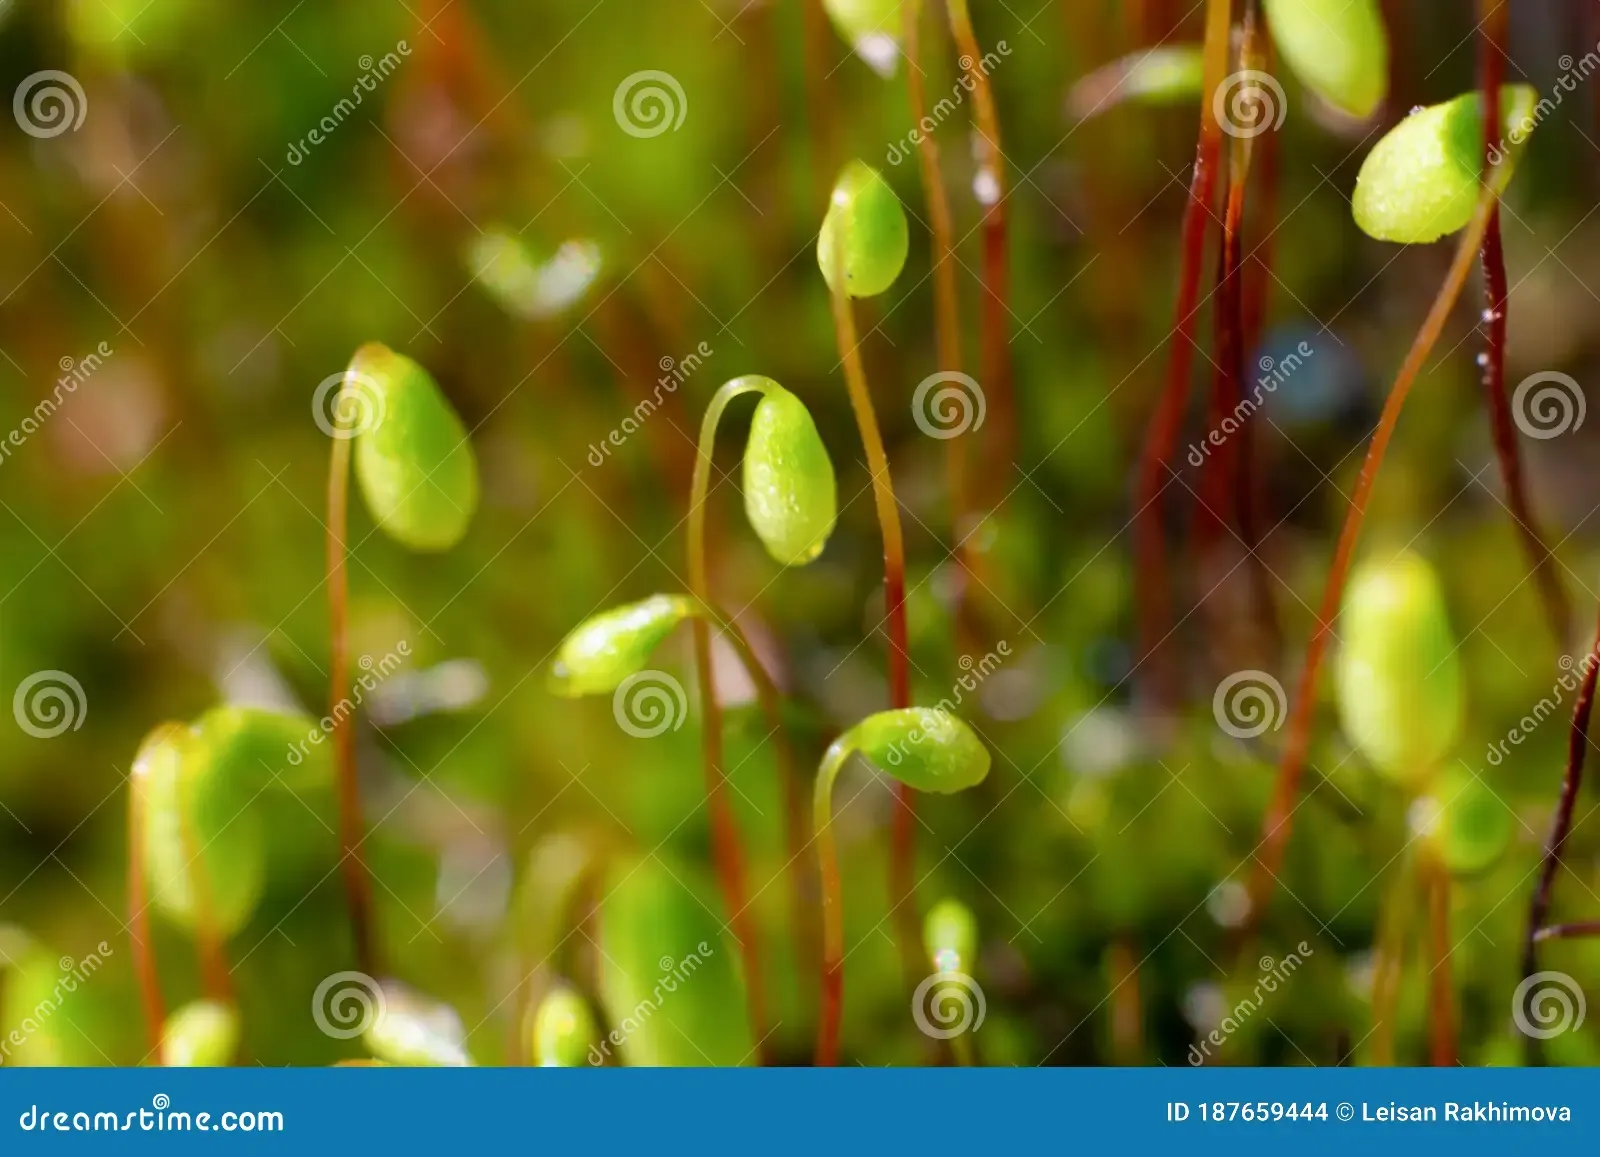 macro-bryum-moss-pohlia-nutans-green-spore-capsules-growing-ground-close-up-macro-bryum-moss-pohlia-nutans-187659444.jpg